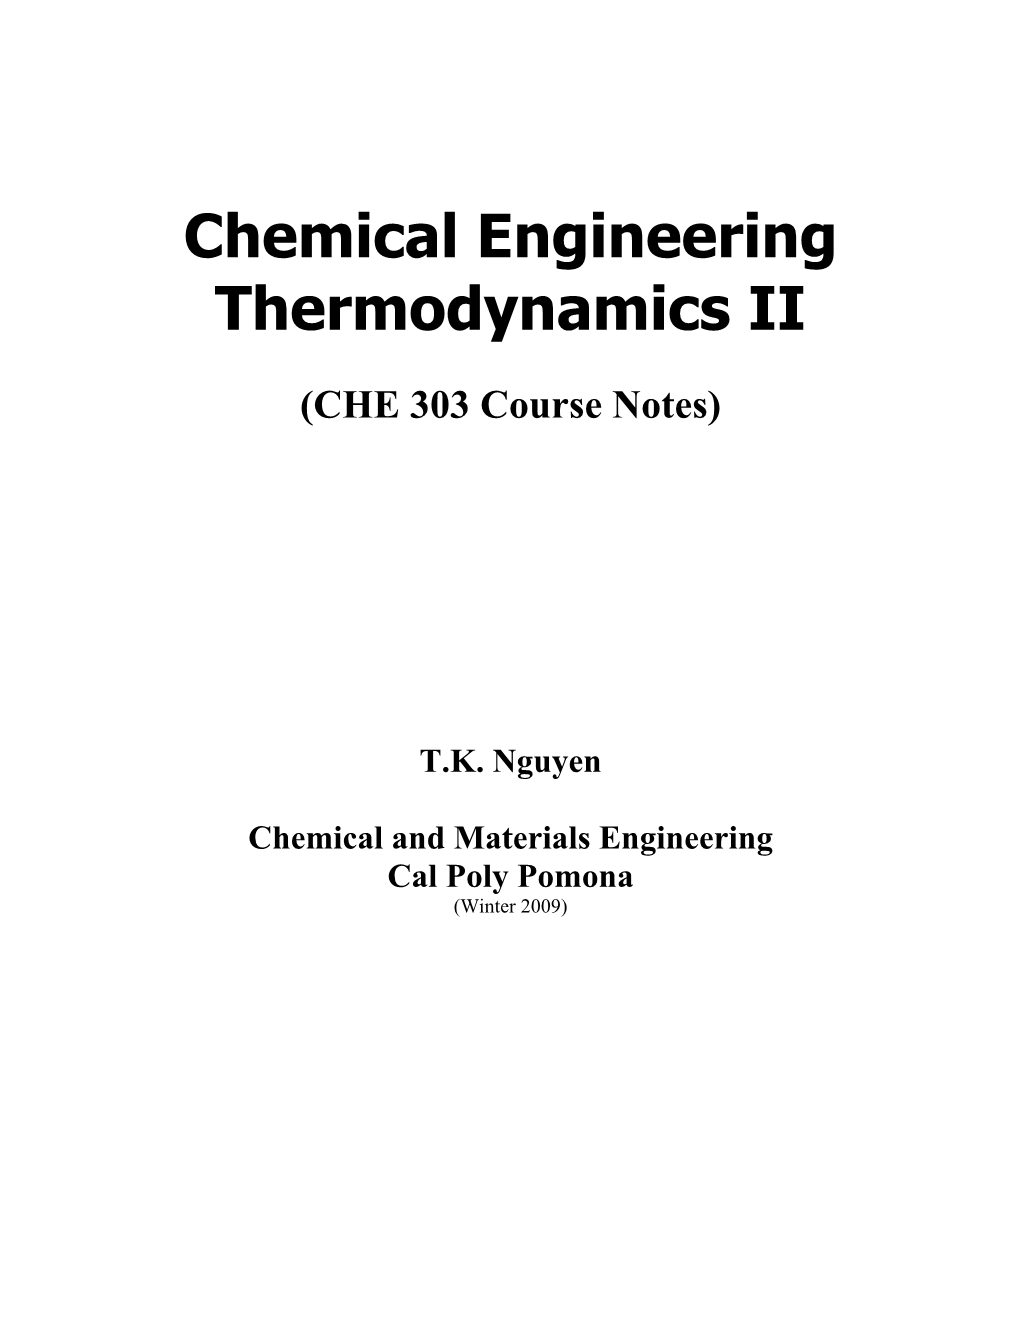 Chemical Engineering Thermodynamics II